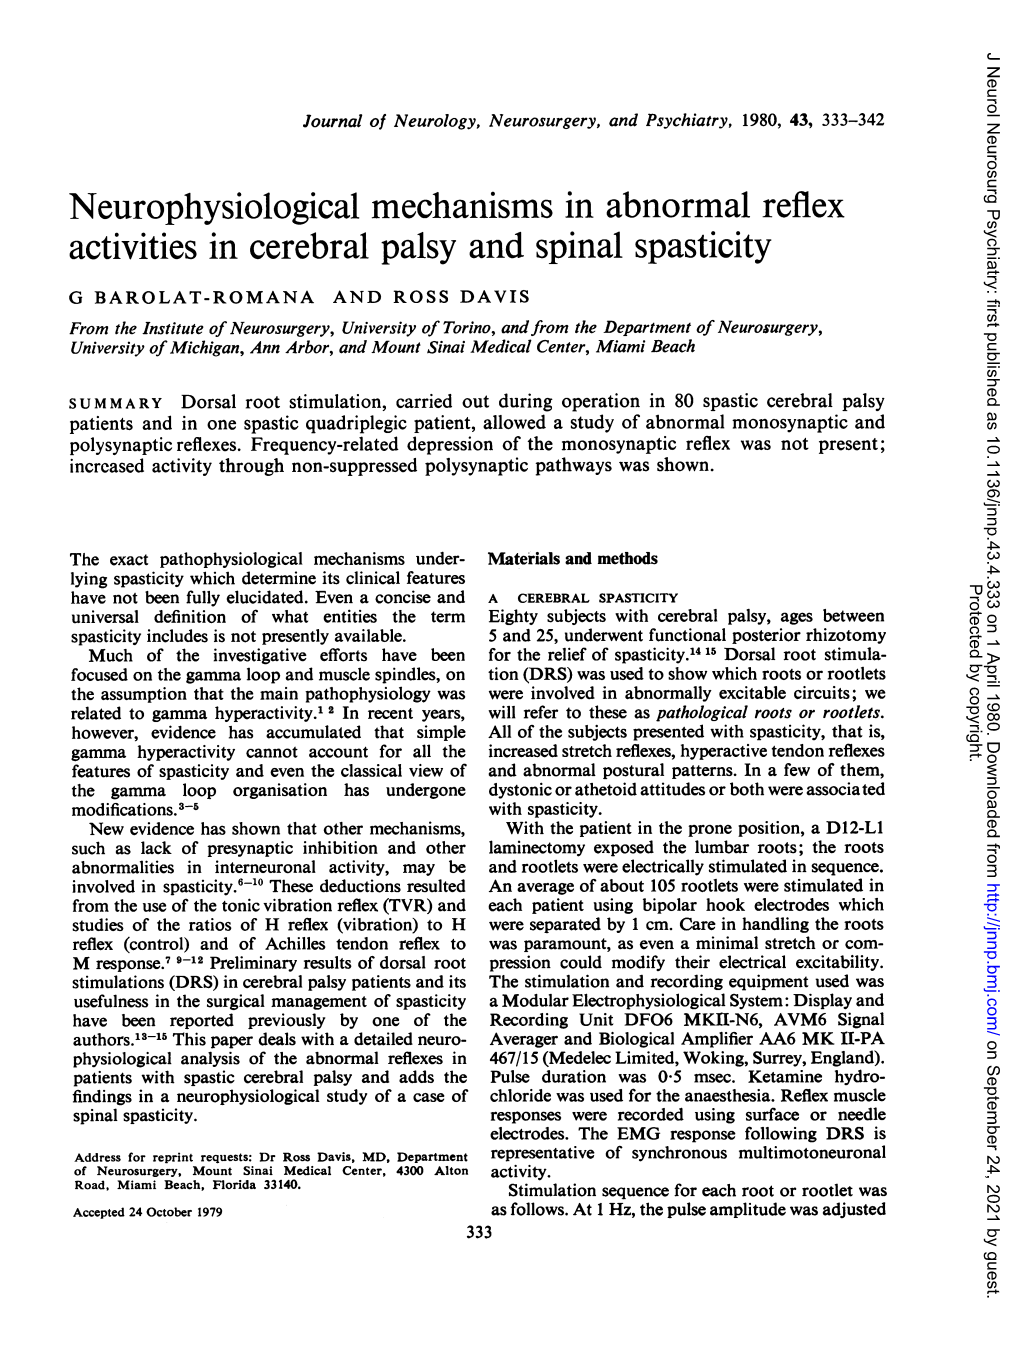 Neurophysiological Mechanisms in Abnormal Reflex